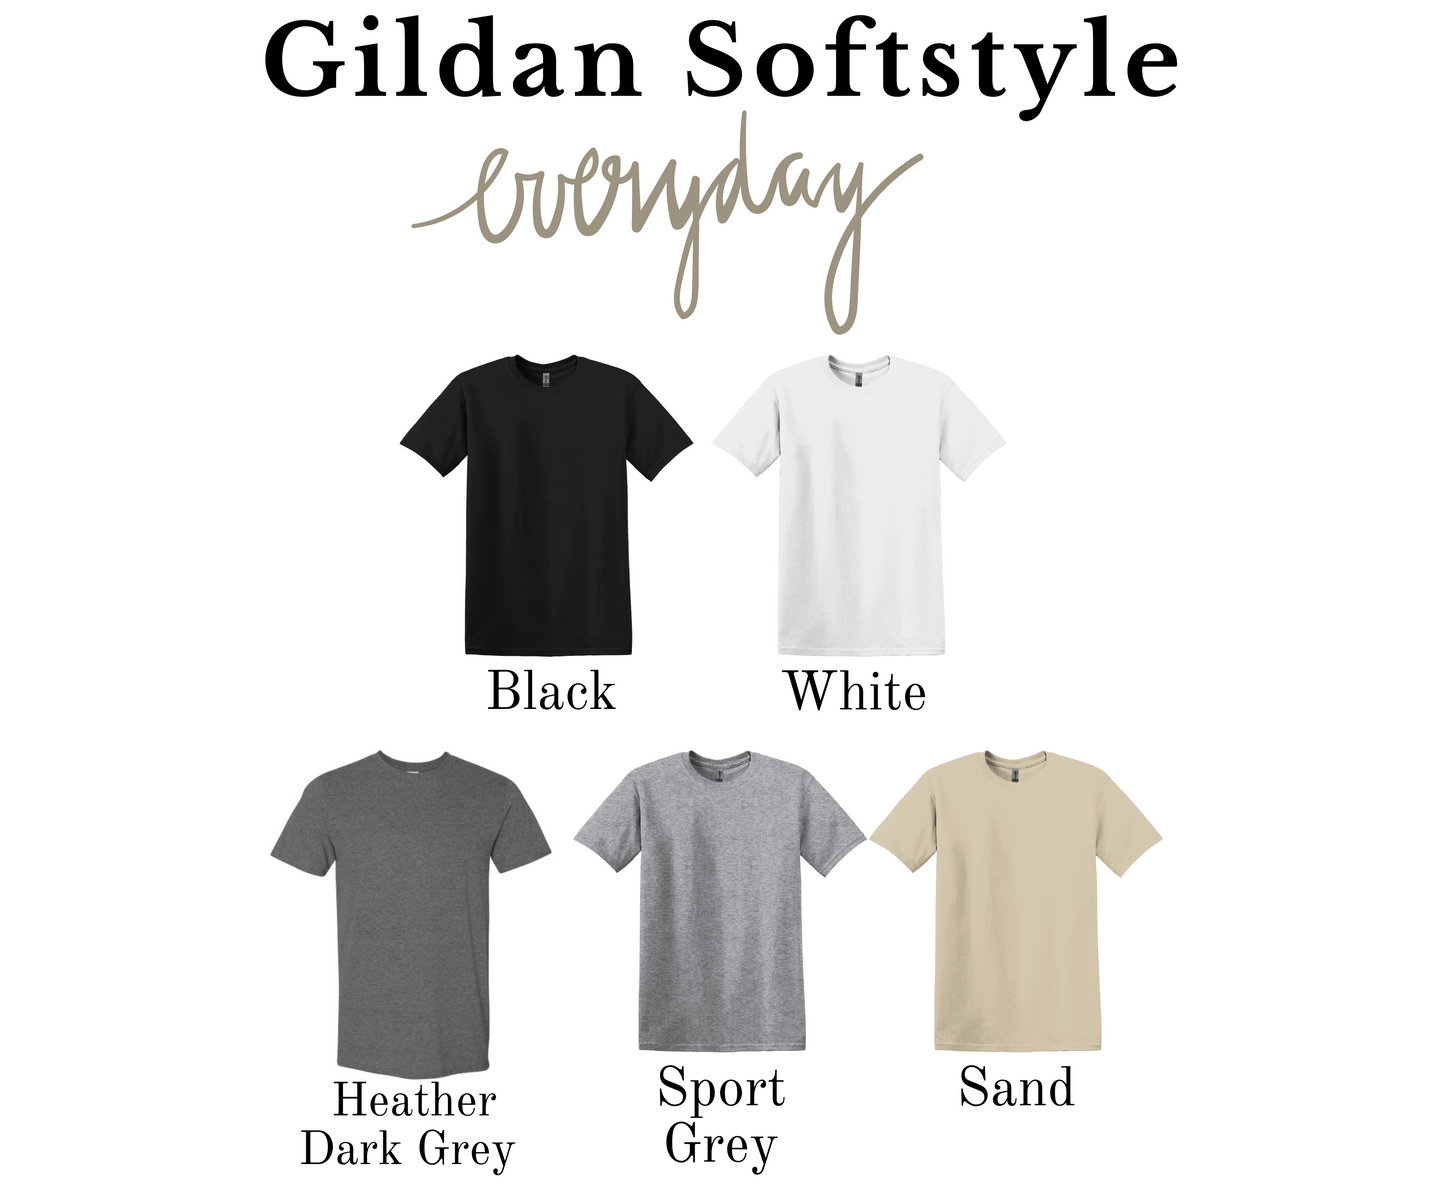 Game Day Trojans Gildan Softstyle Sweatshirt or T-shirt